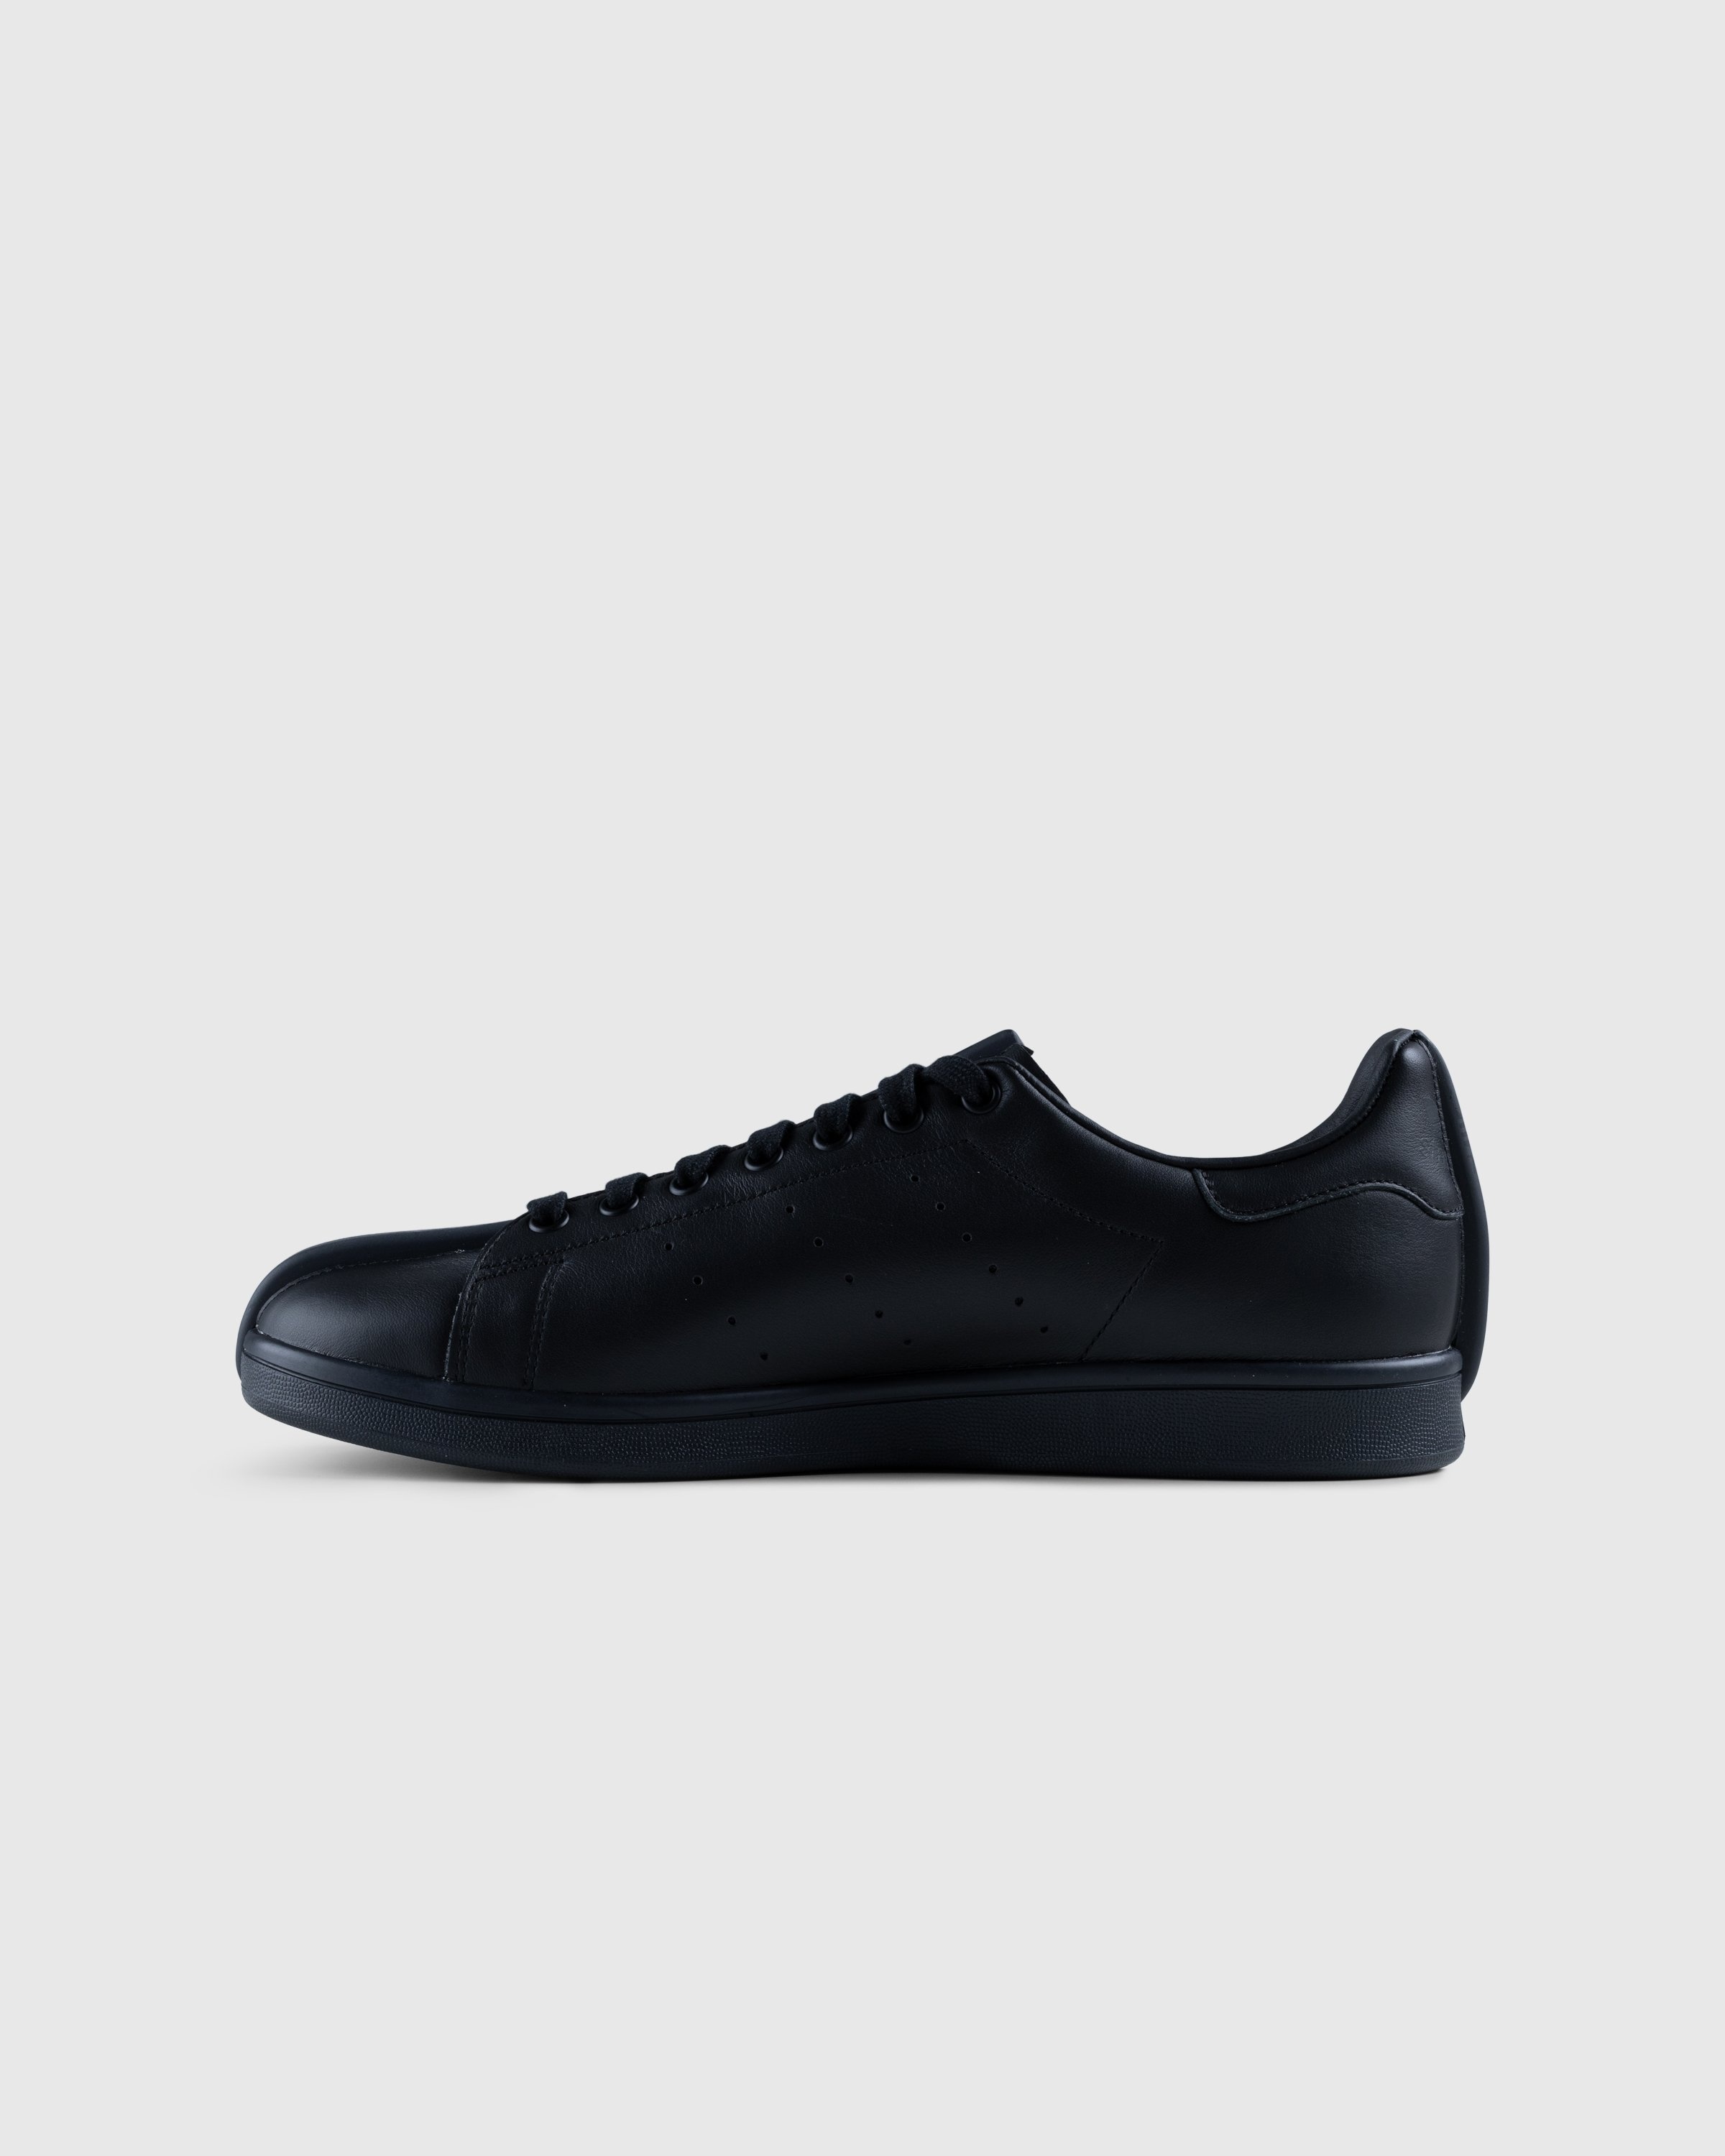 Craig Green x Adidas – CG Split Stan Smith Core Black/Granite - Sneakers - Black - Image 2